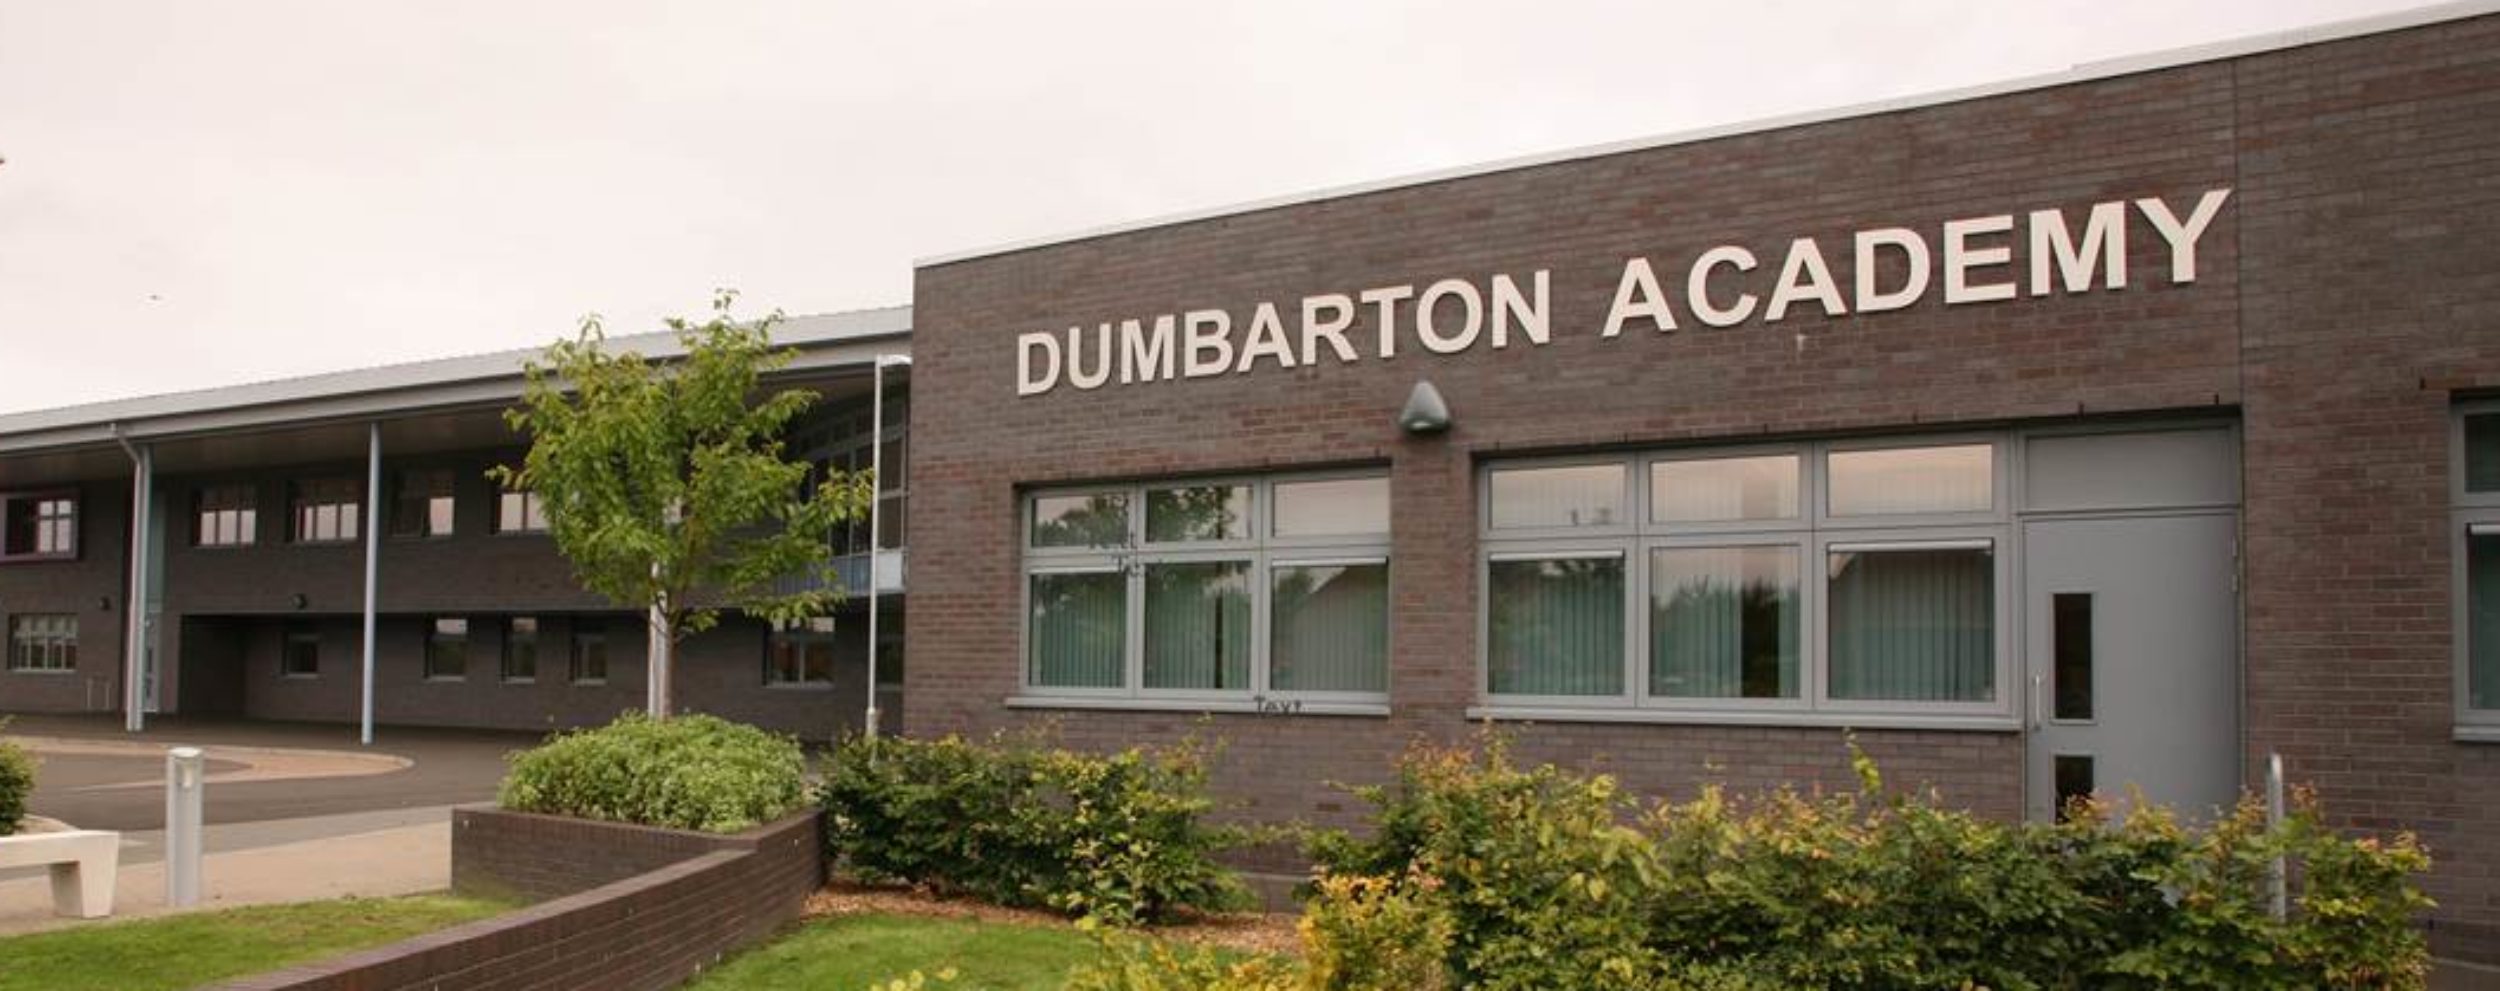 Dumbarton Academy